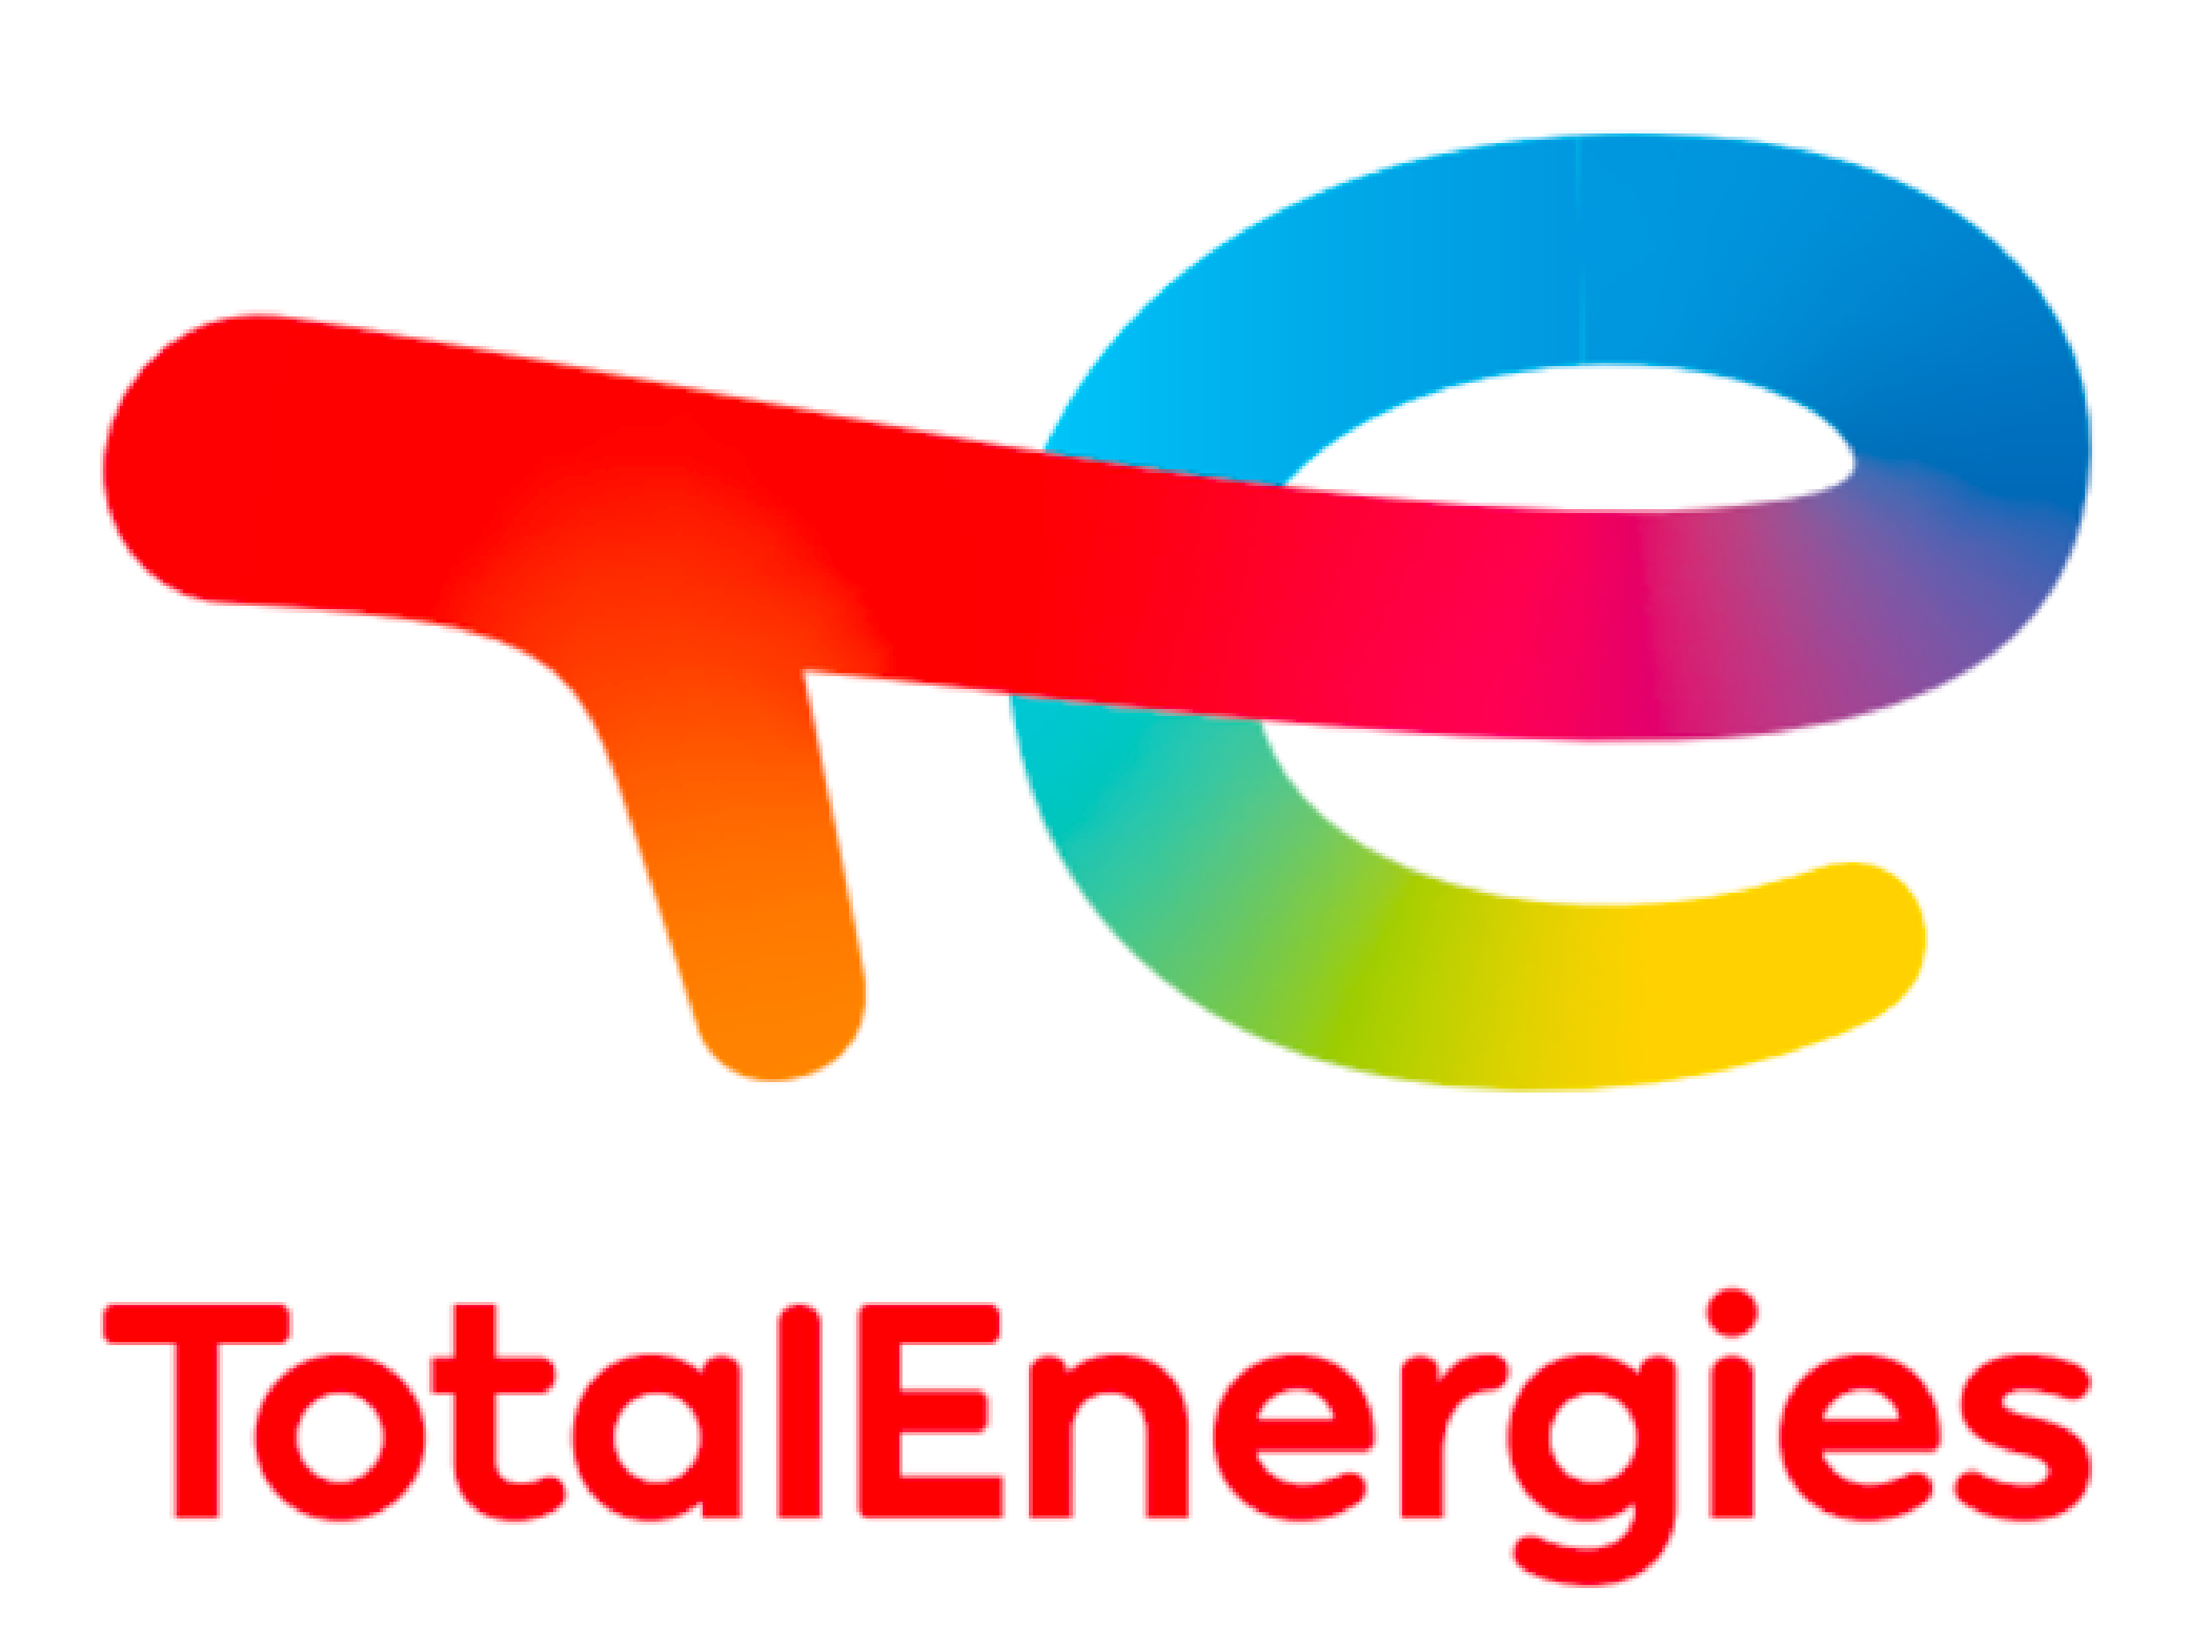 Total Energies logo